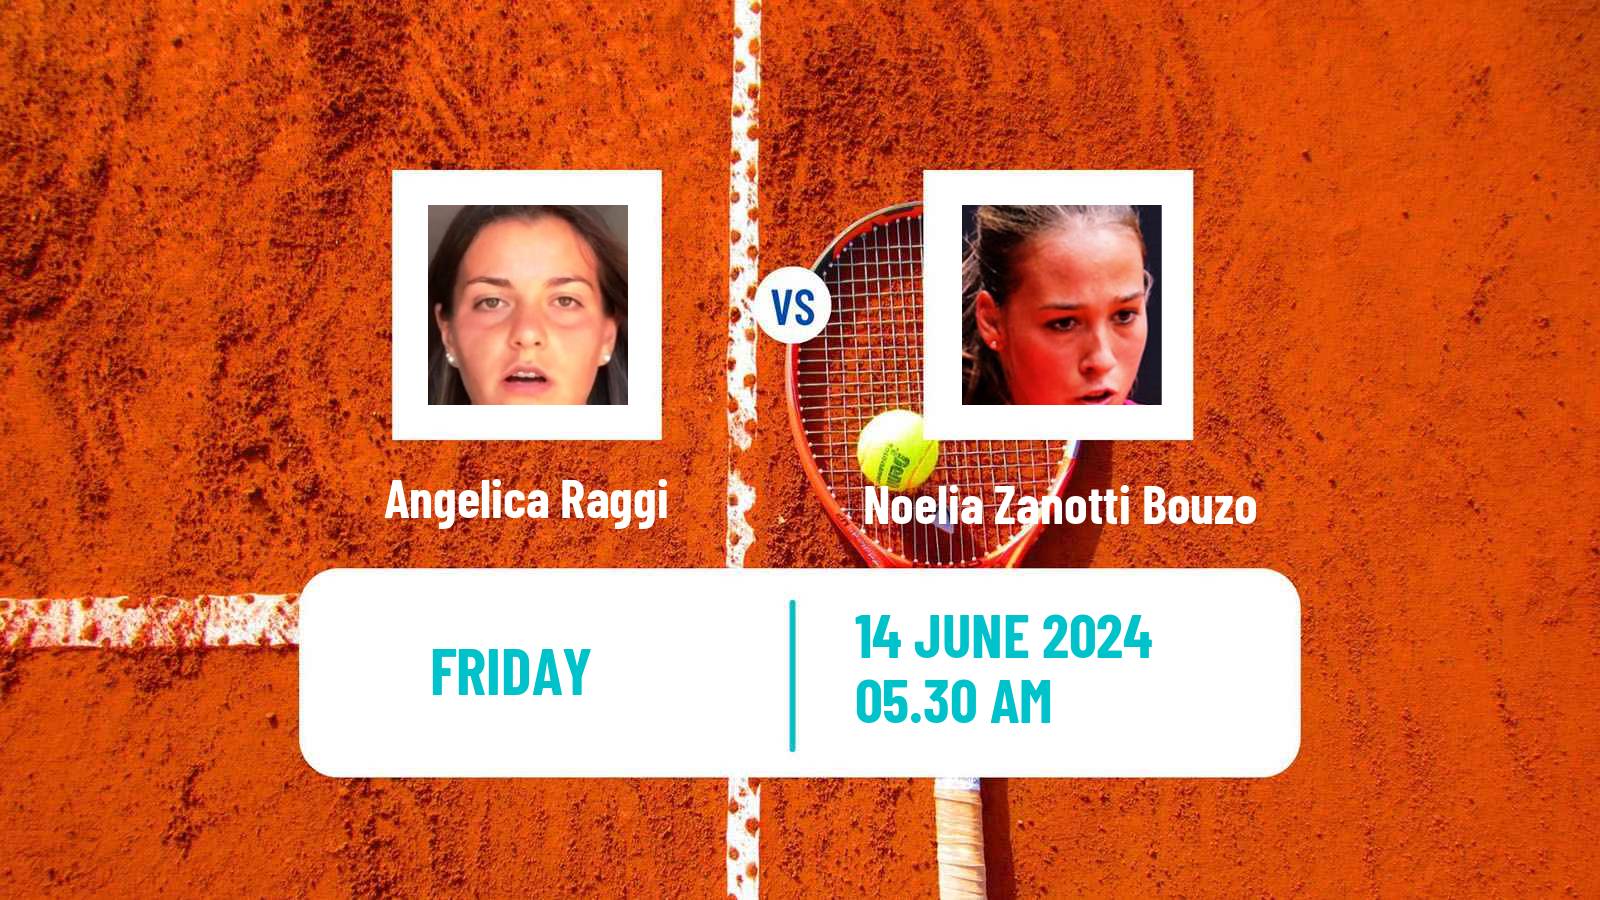 Tennis ITF W15 Madrid 2 Women Angelica Raggi - Noelia Zanotti Bouzo